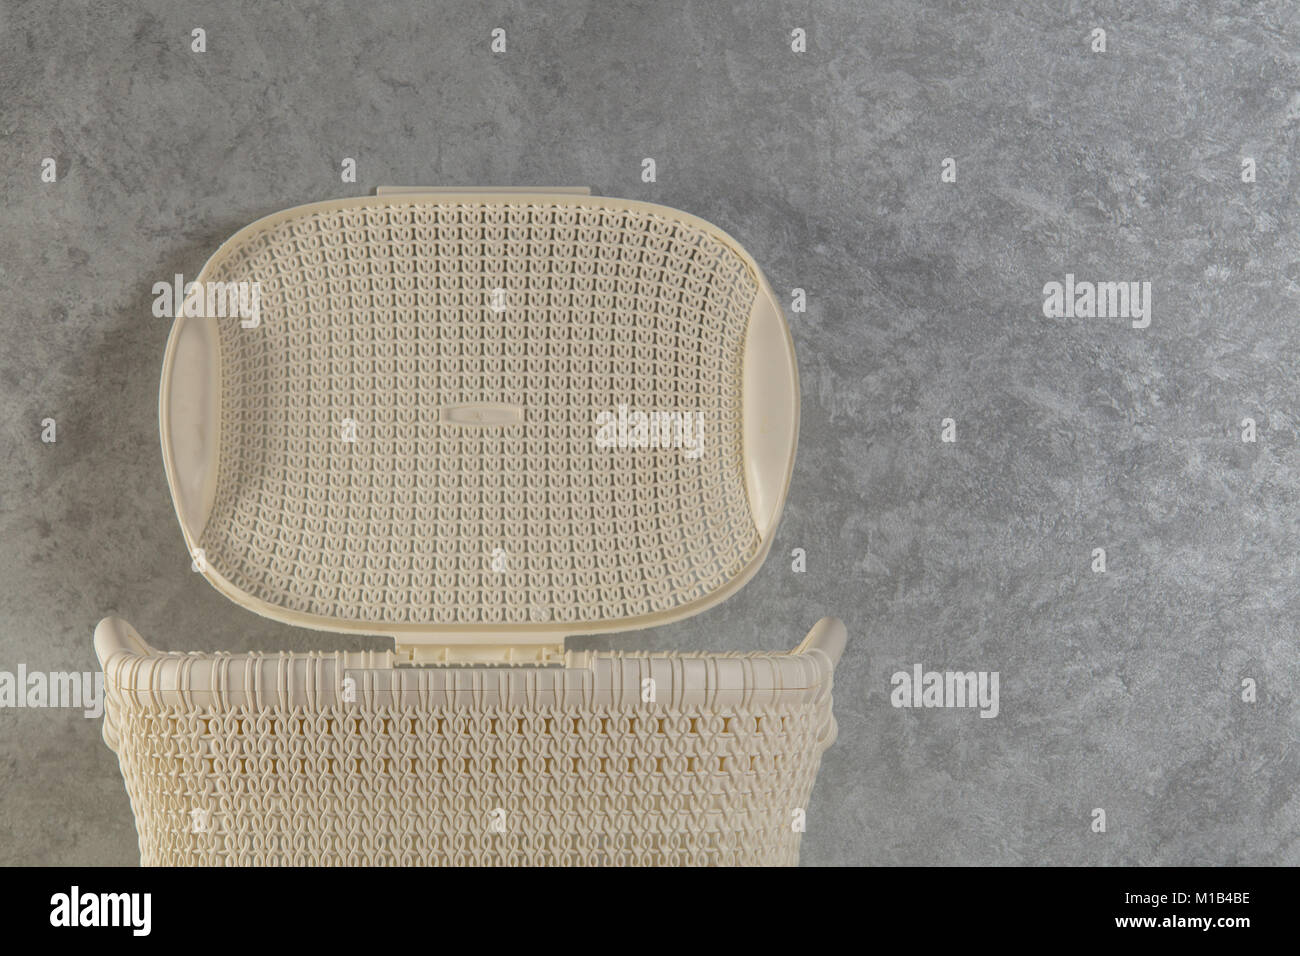 Opened white laundry basket on gray wall background close-up Stock Photo